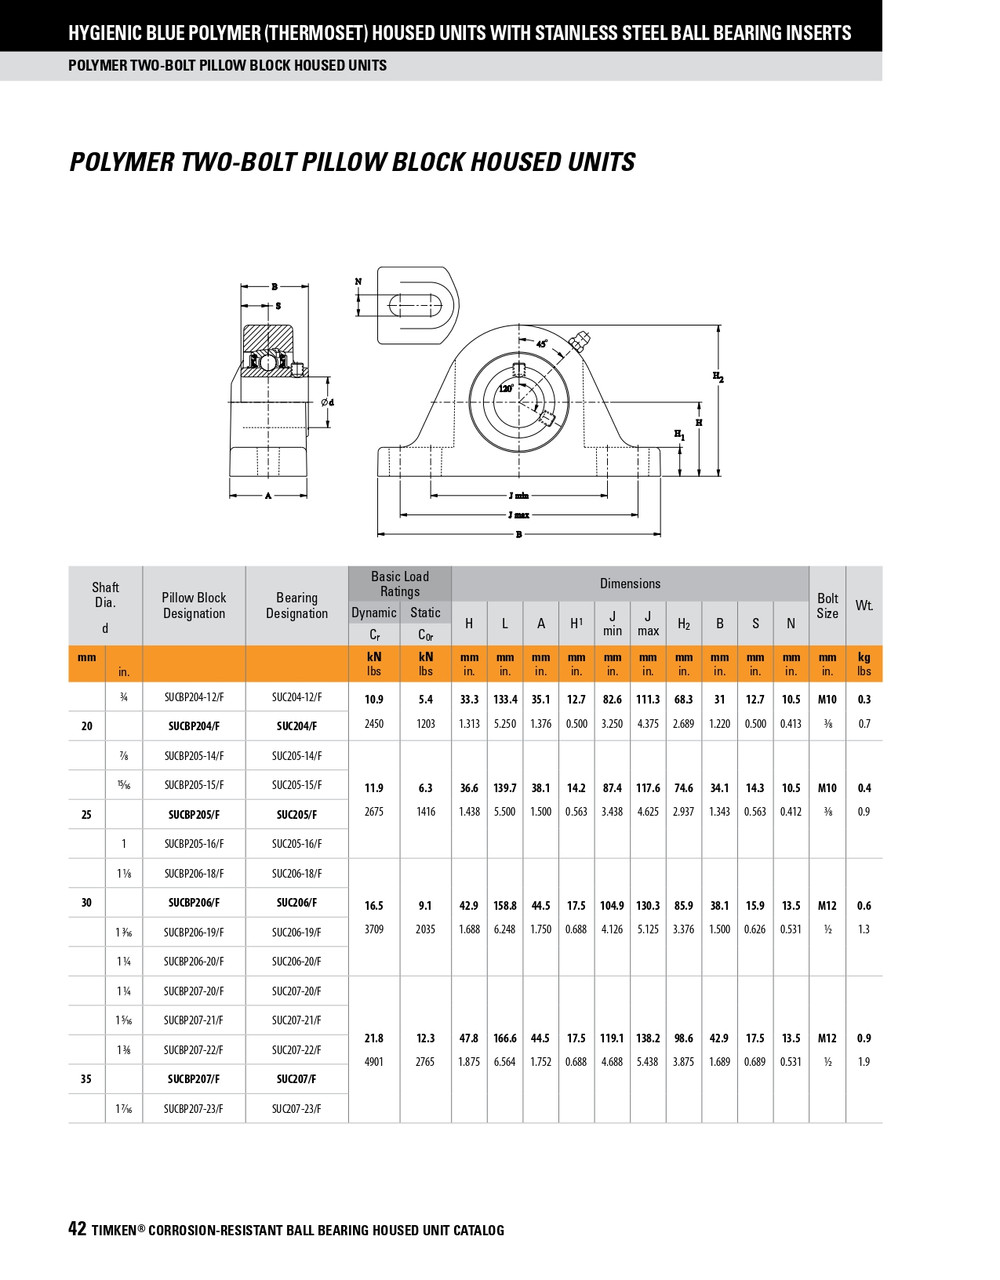 1-7/16" Hygienic Polymer Set Screw Pillow Block Assembly   SUCBP207-23/FVSL613